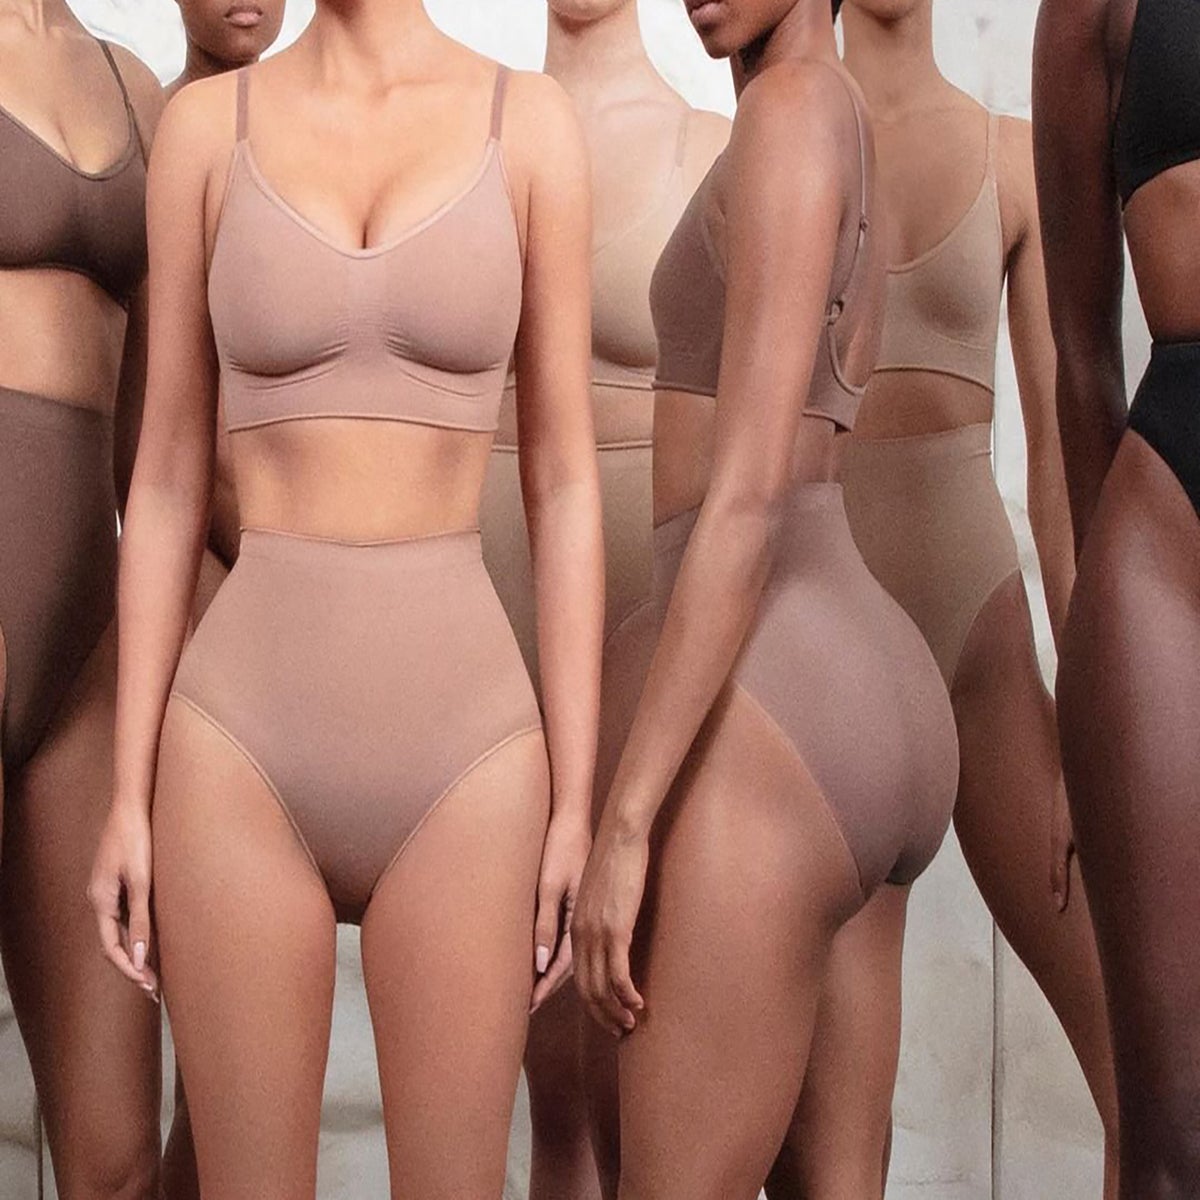 Kim Kardashian's Skims ad did not edit her waist